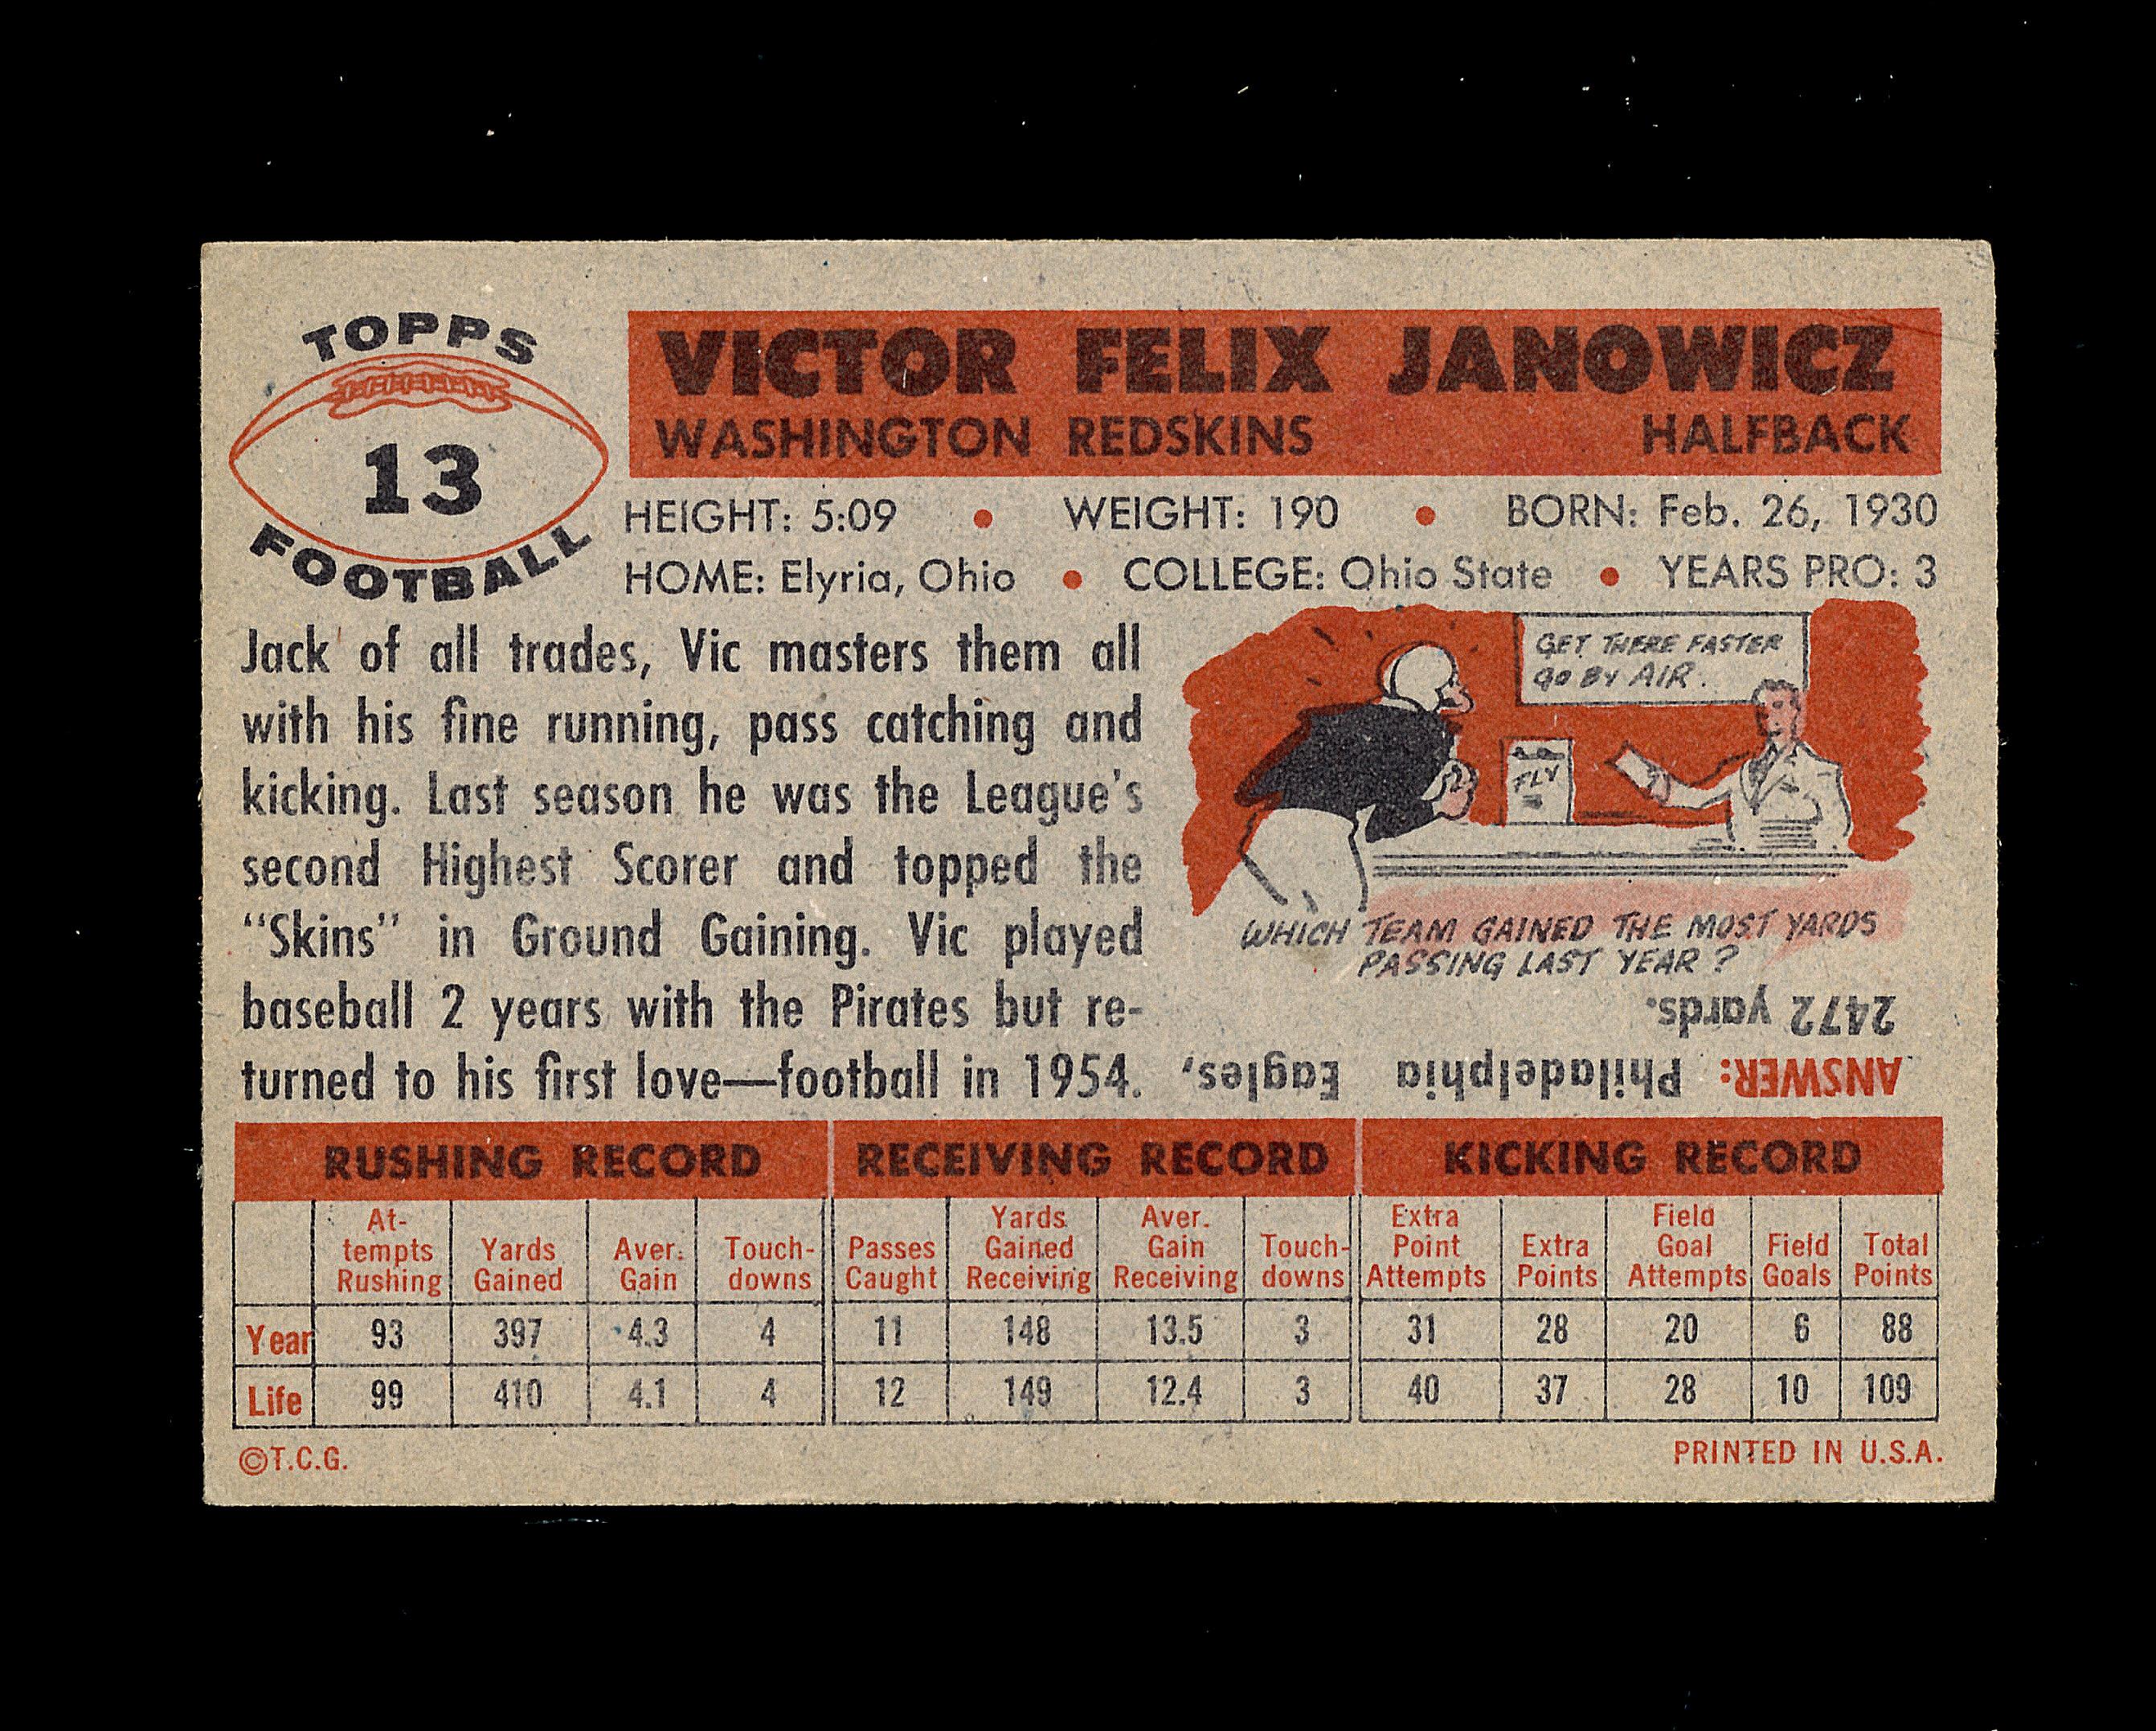 1956 Topps Football Card #13 Vic Janowicz Washington Redskins. EX Condition